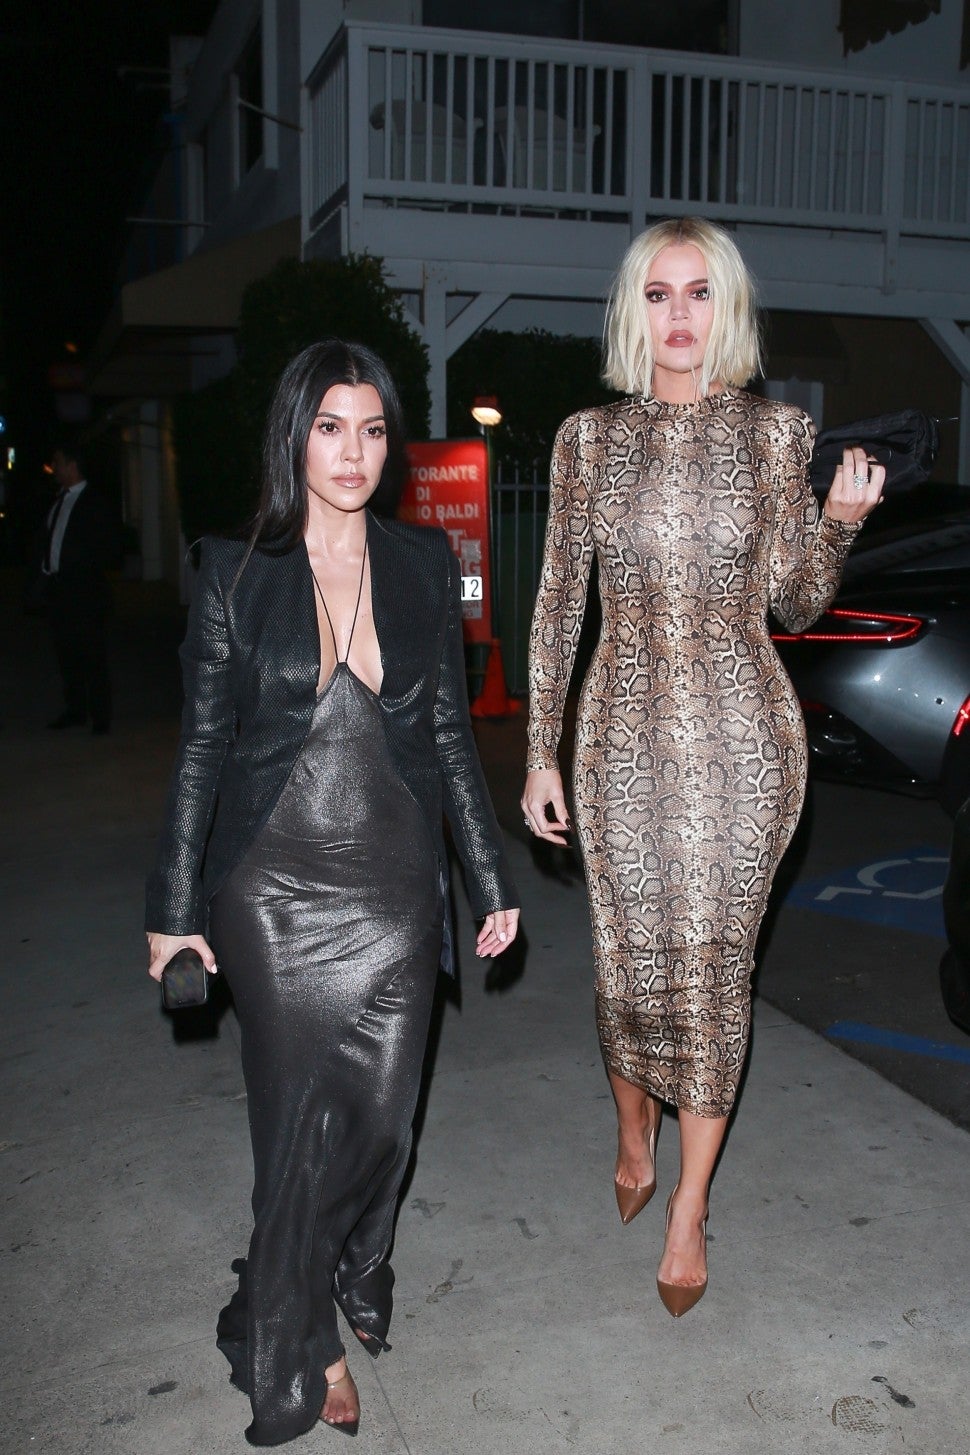 Kourtney Kardashian and Khloe Kardashian enjoy a night out